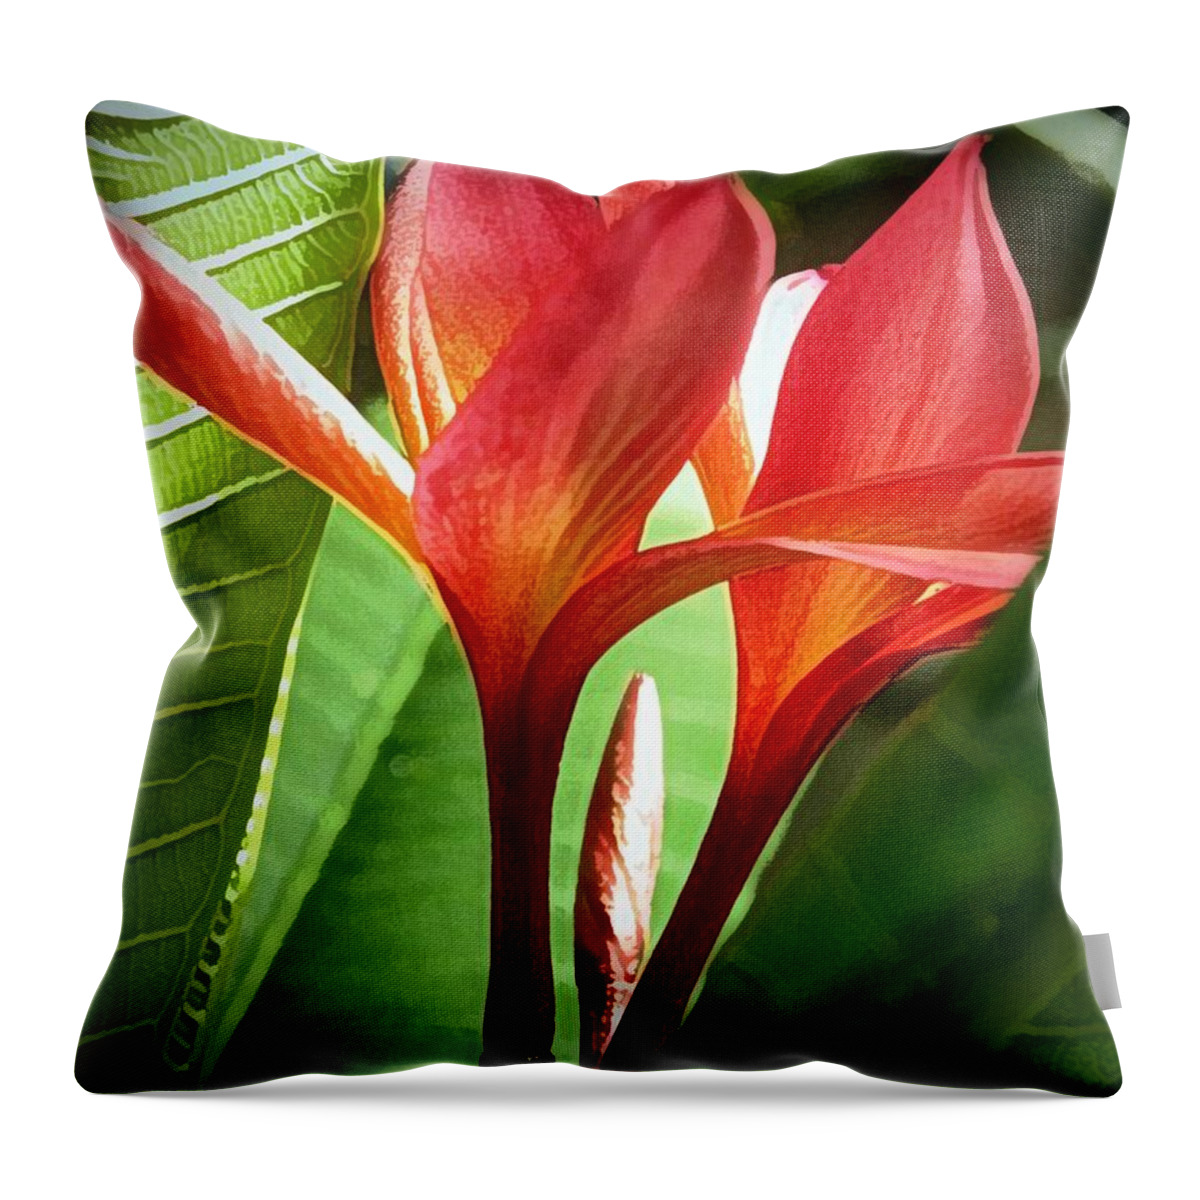 Hawaii Throw Pillow featuring the digital art Plumerias by Dorlea Ho